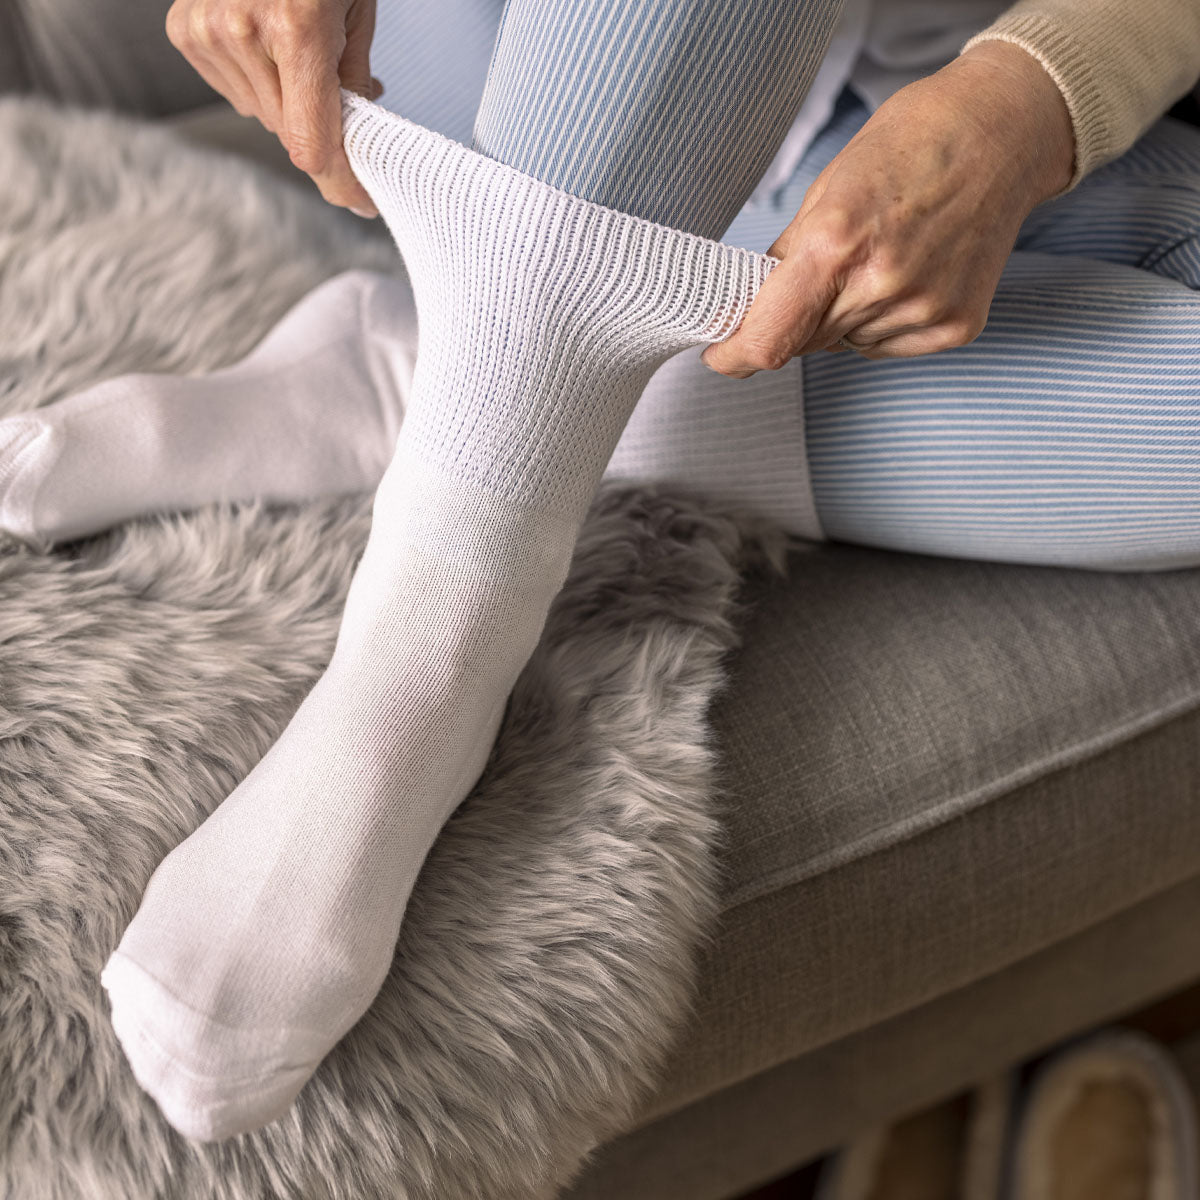 3 Pairs IOMI FootNurse Cushion Foot Bamboo Blend Diabetic Socks - White